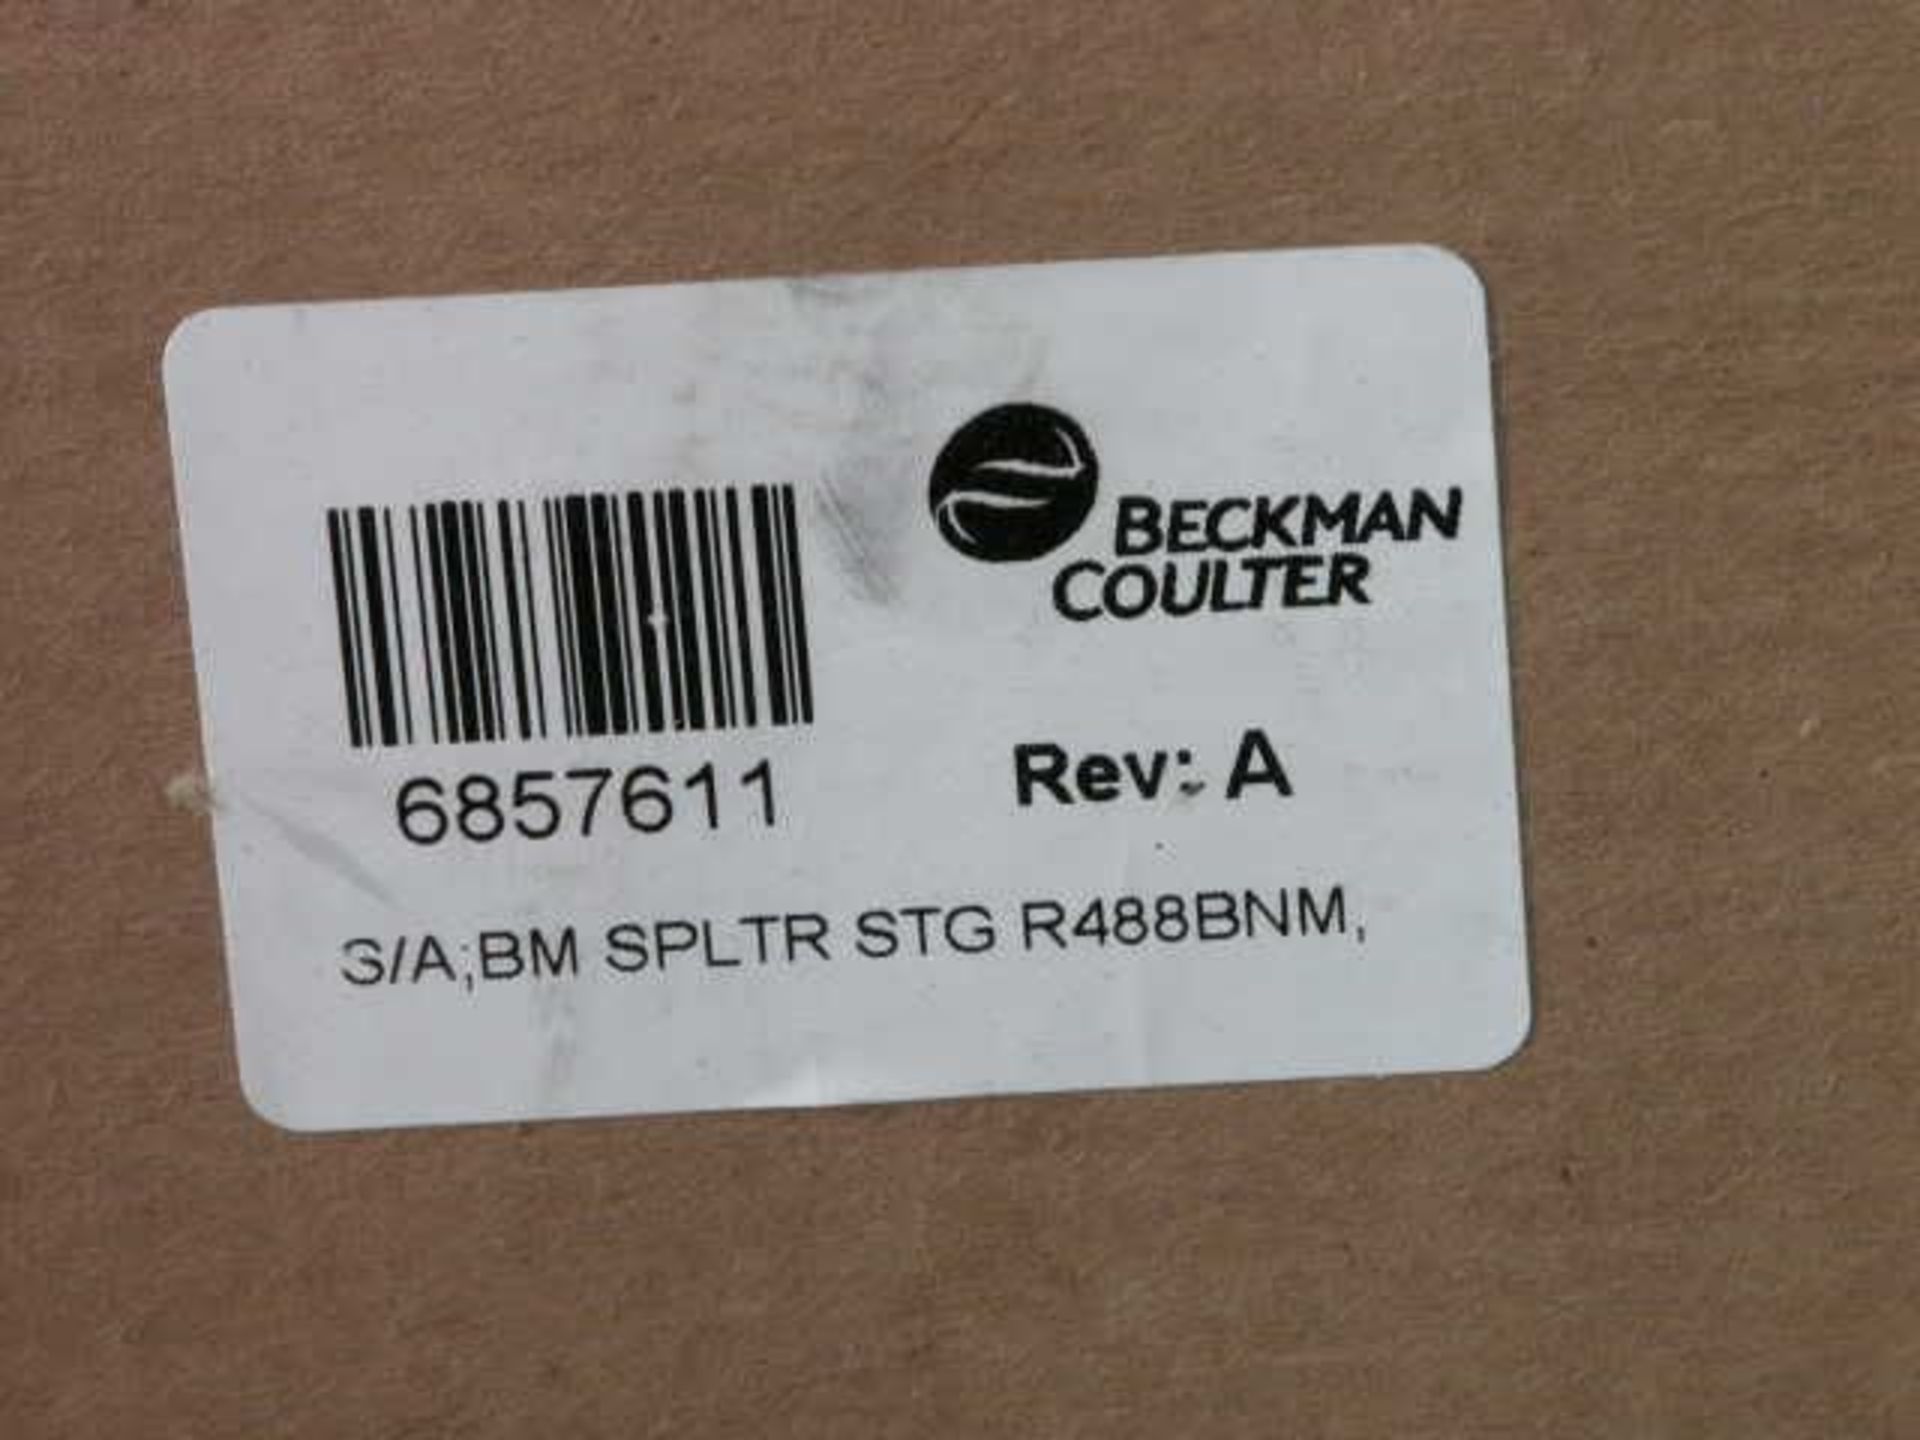 Beckman Newport M-VPH-2 # 6857611 Beam Splitter Rev A S/A BM SPLTR STG R488BNM, Qty 1, 331882353548 - Image 2 of 5